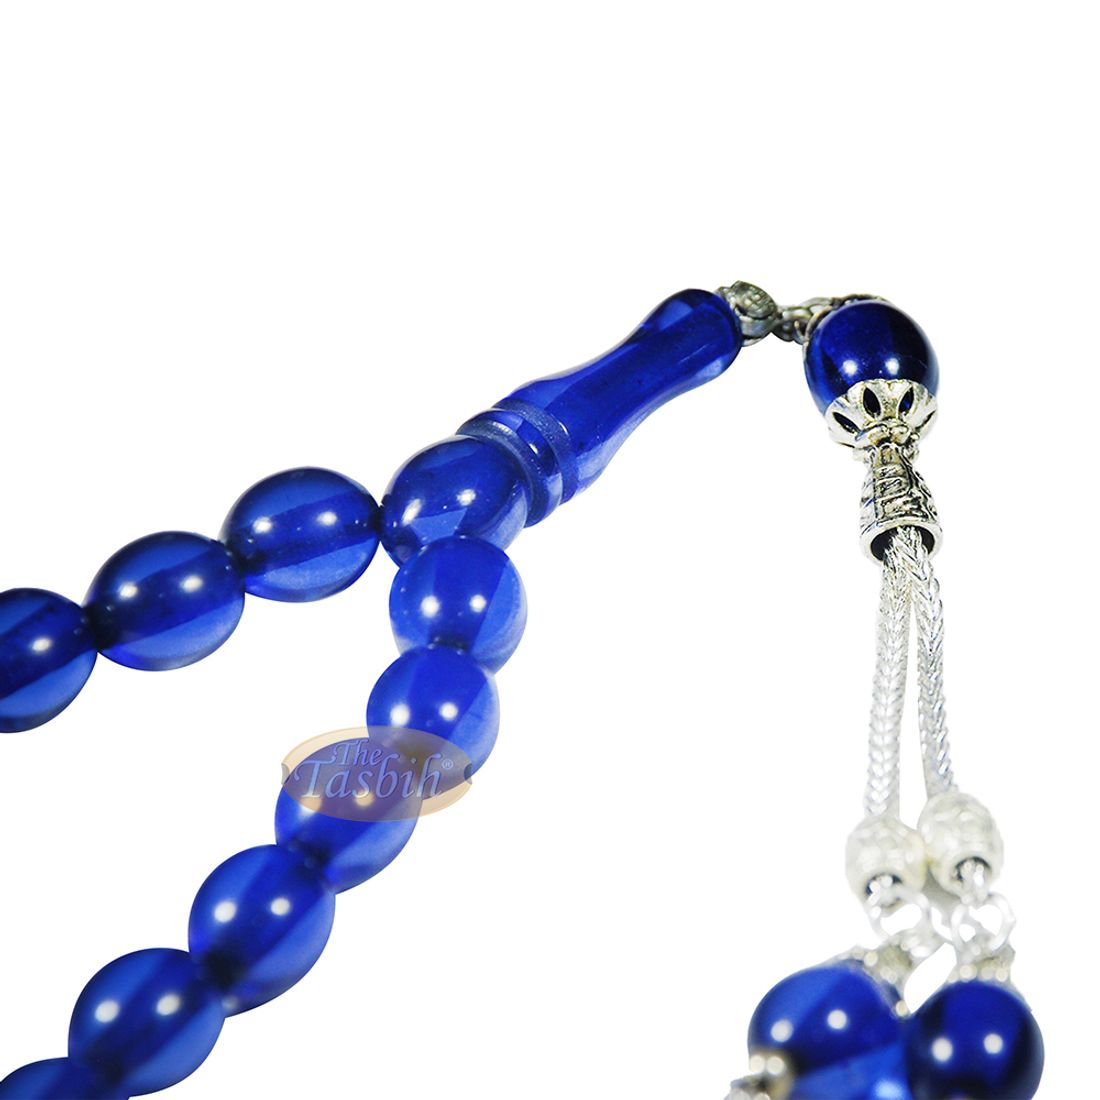 Islamic TULIP TASBIH, Small Translucent Dark Blue 33-Bead 10x9mm Acrylic Oval Turkish Sibha Tesbih Prayer Beads Tulip Charm Tassels Eid Gift